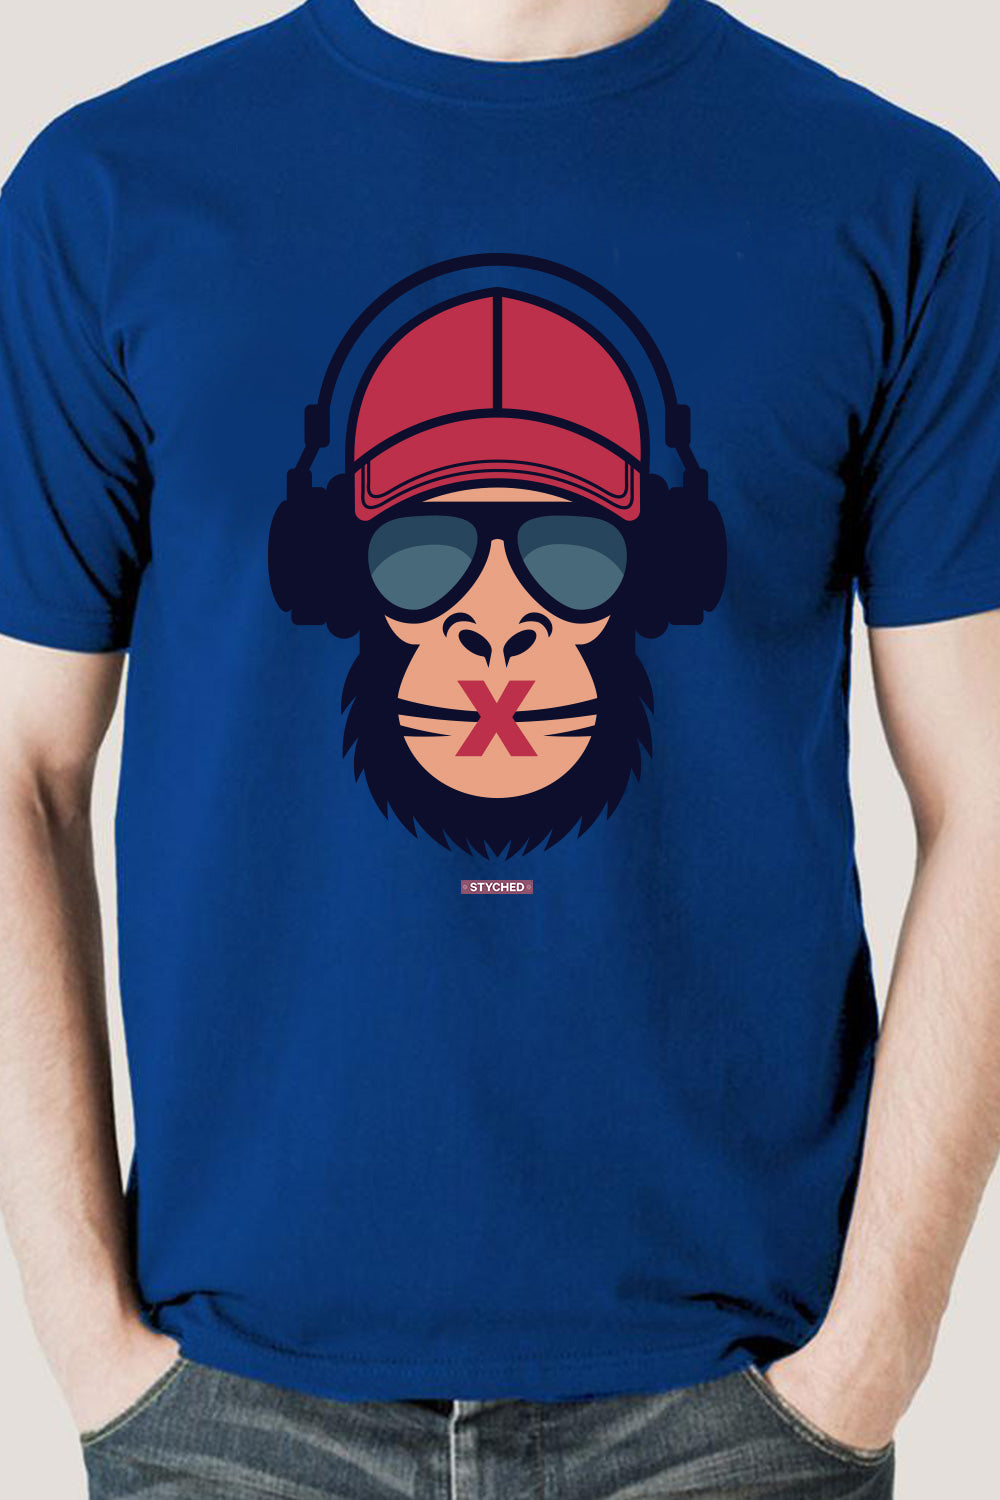 Bura mat dekho, bolo, suno - Wise monkey - Blue printed casual tshirt online